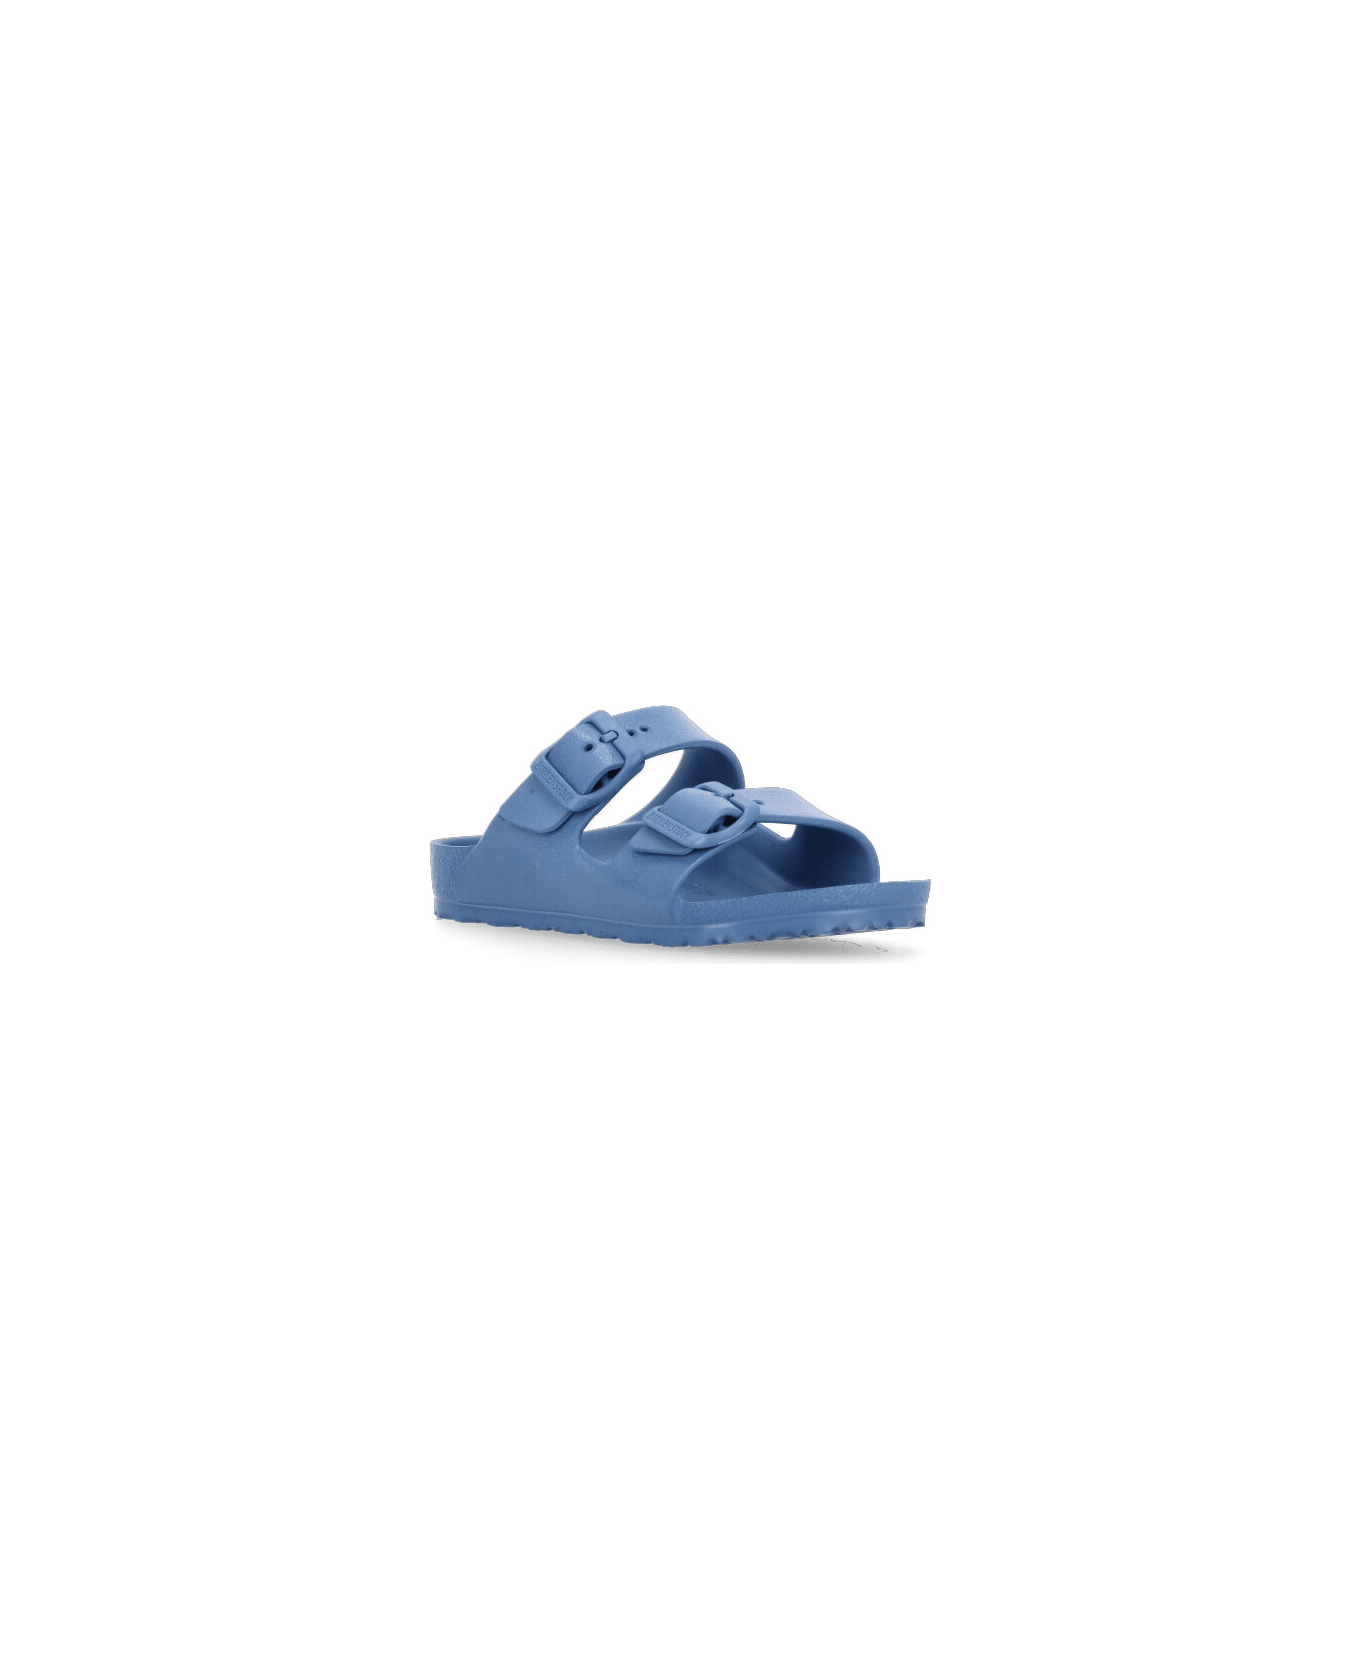 Birkenstock Slipper With Buckles - Light Blue